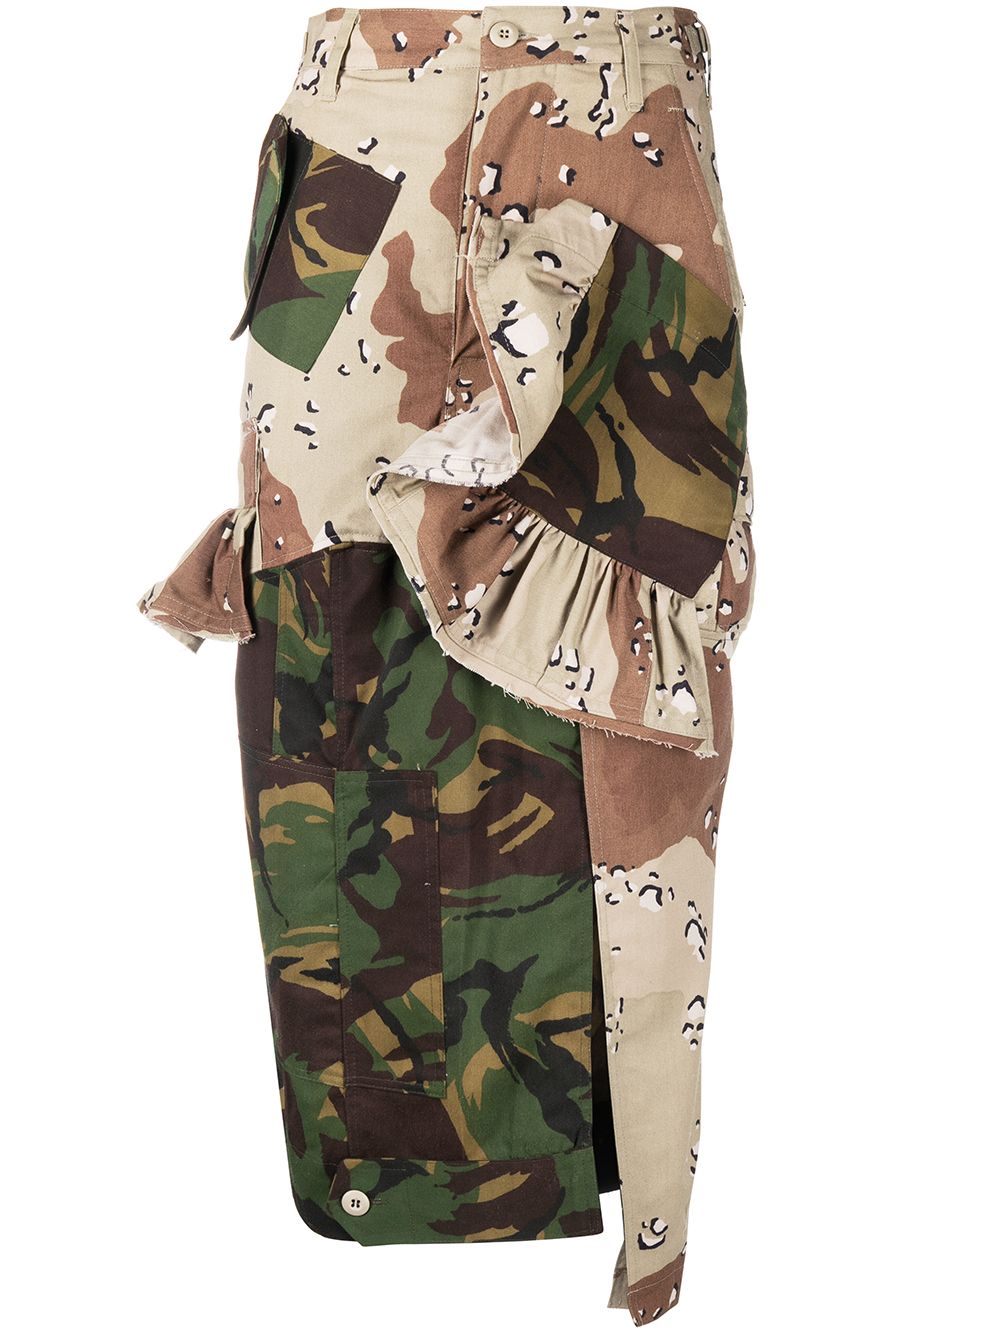 Preen By Thornton Bregazzi patchwork camouflage-print pencil skirt - Green von Preen By Thornton Bregazzi